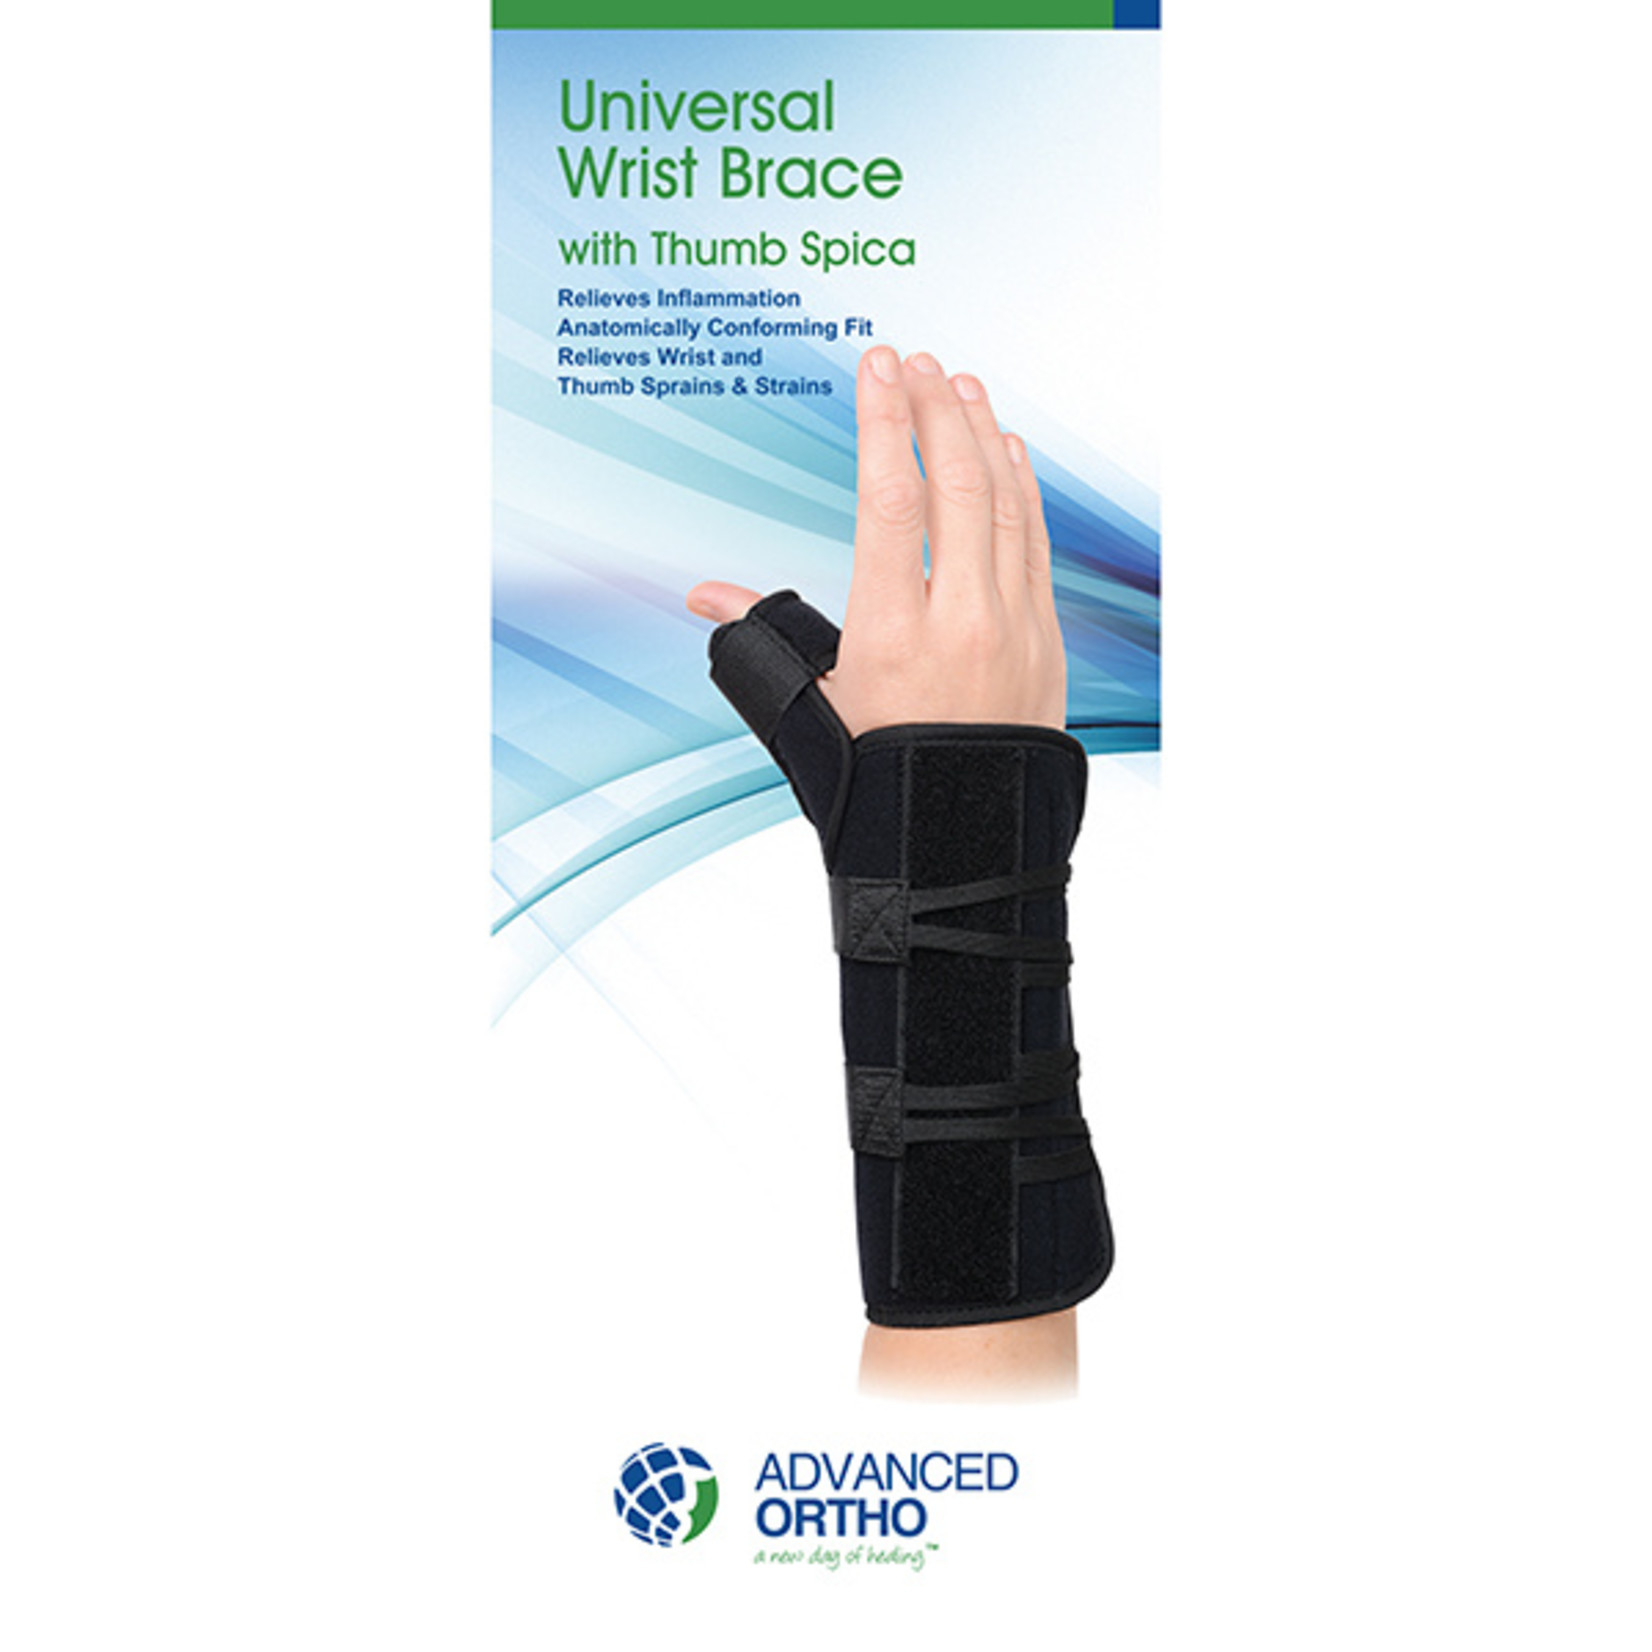 Universal Wrist Brace With Thumb Spica (Left Hand) - Hcpc: L3807 / L3809